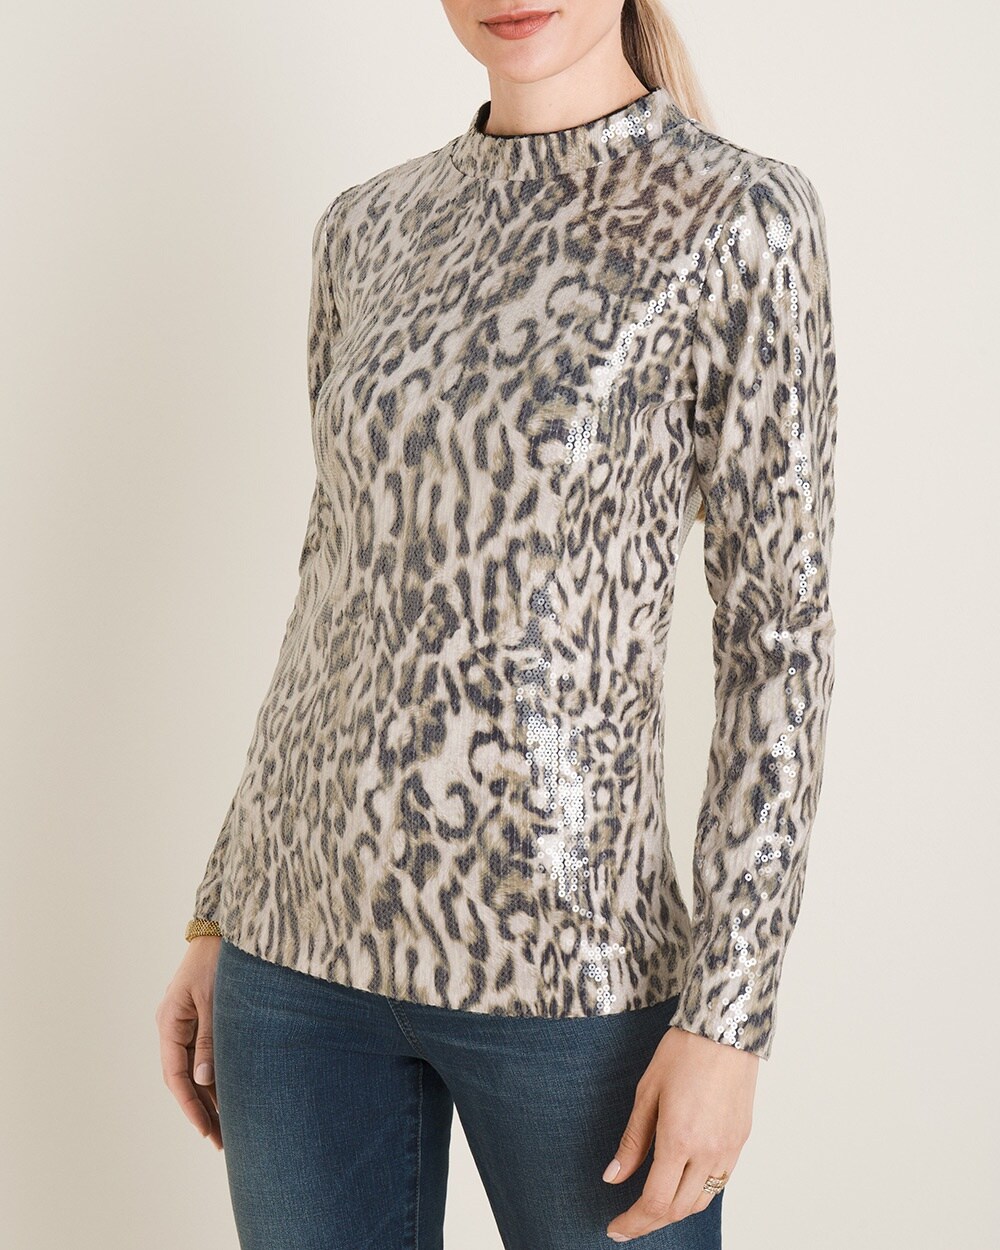 Cheetah-Print Sequin Top